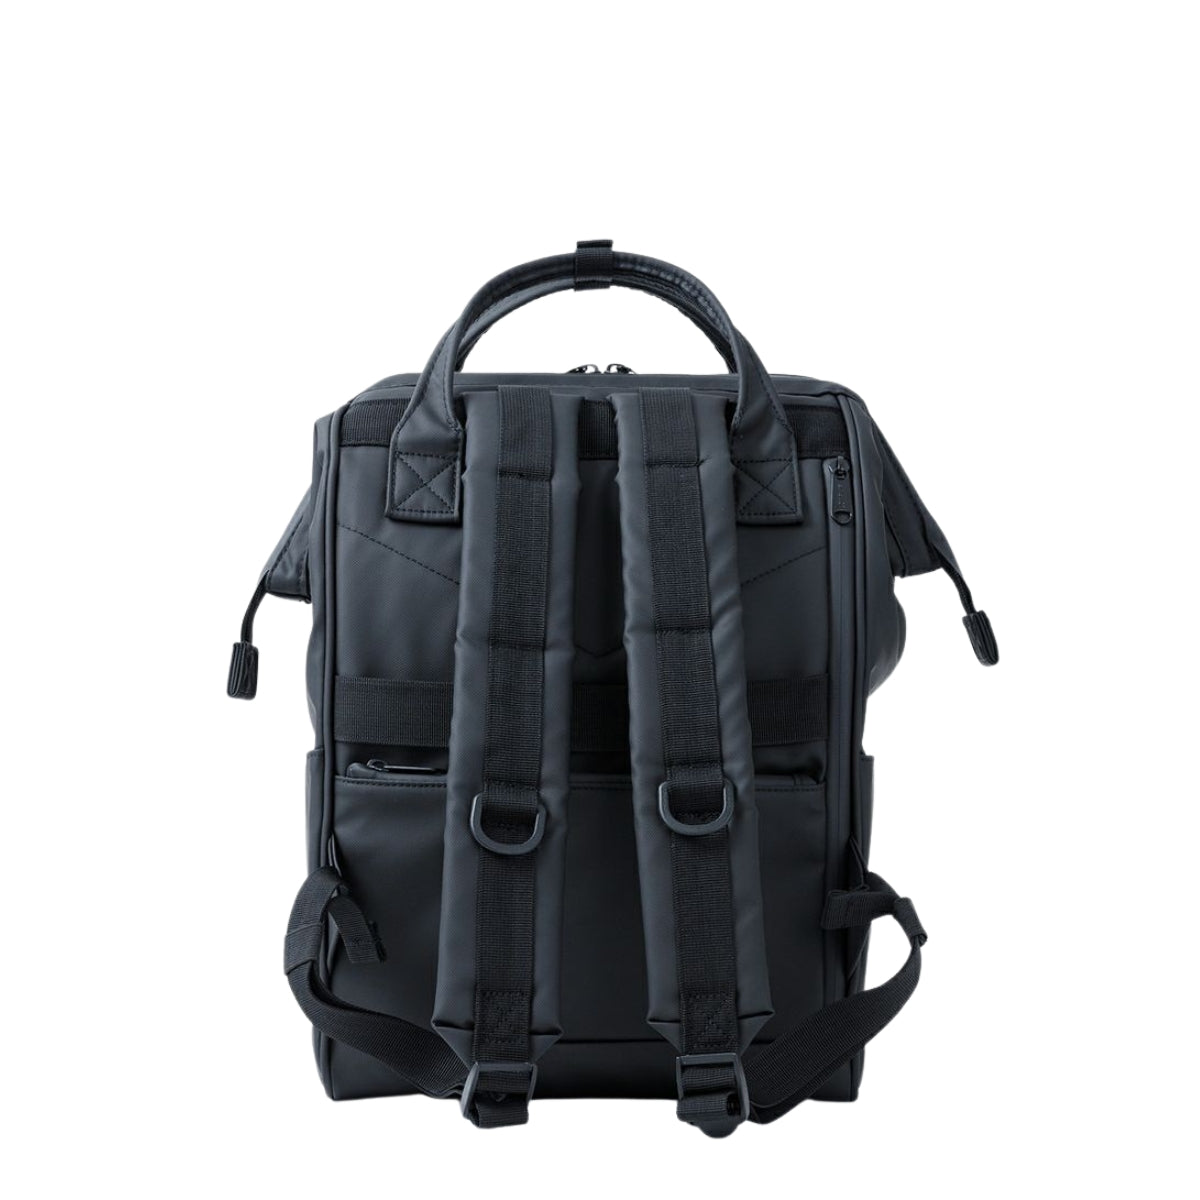 Anello Acqua Backpack Regular in Black